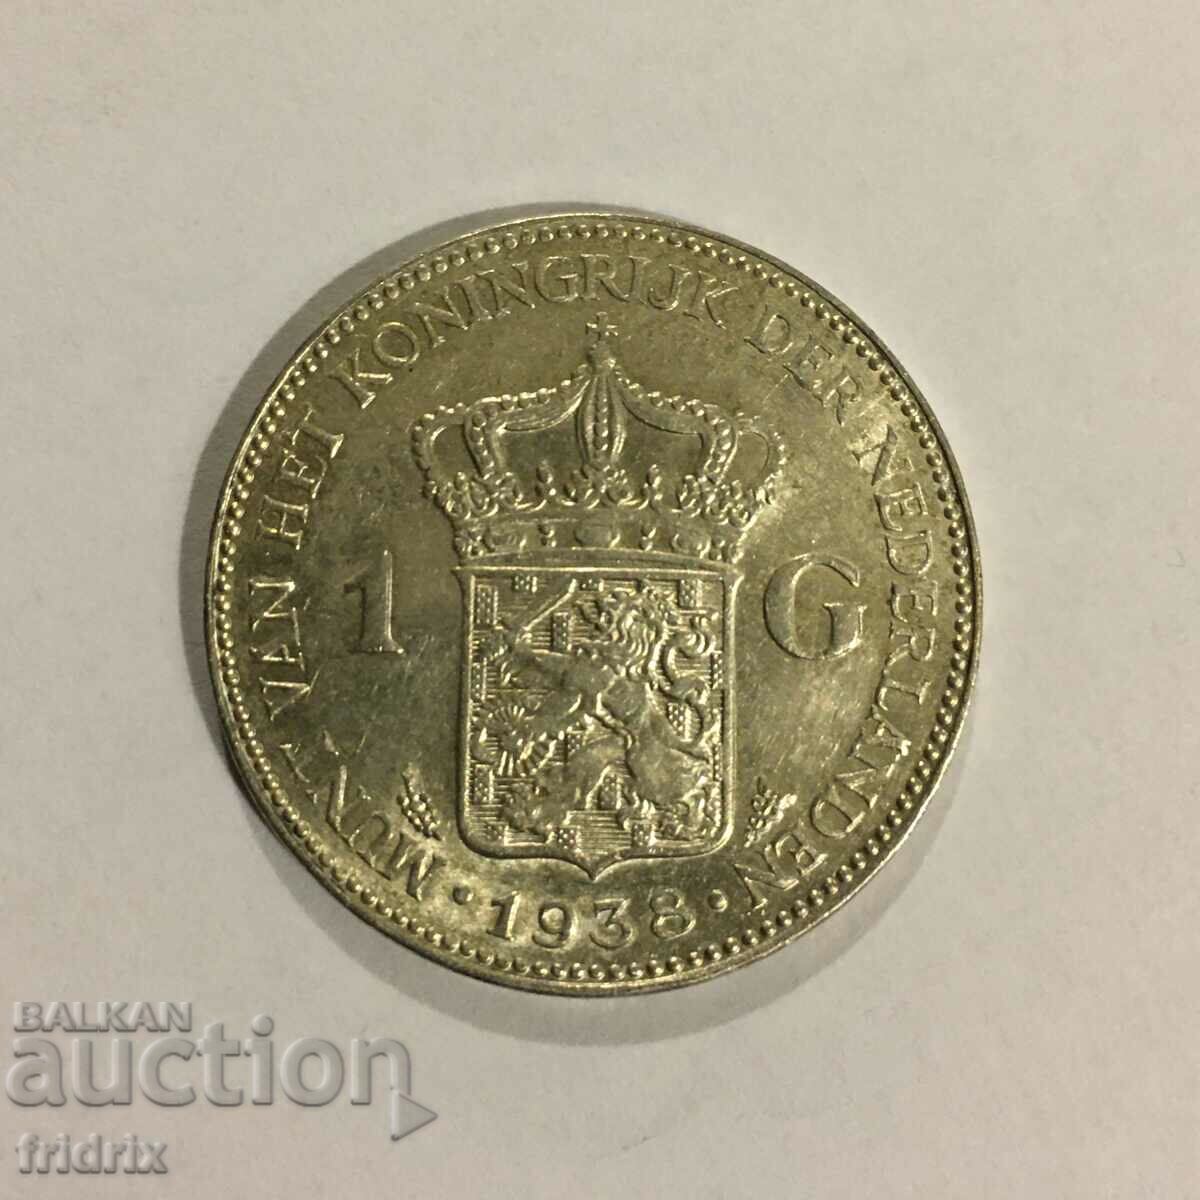 Ολλανδία 1 gulden 1938 / Ολλανδία 1 gulden 1938 UNC